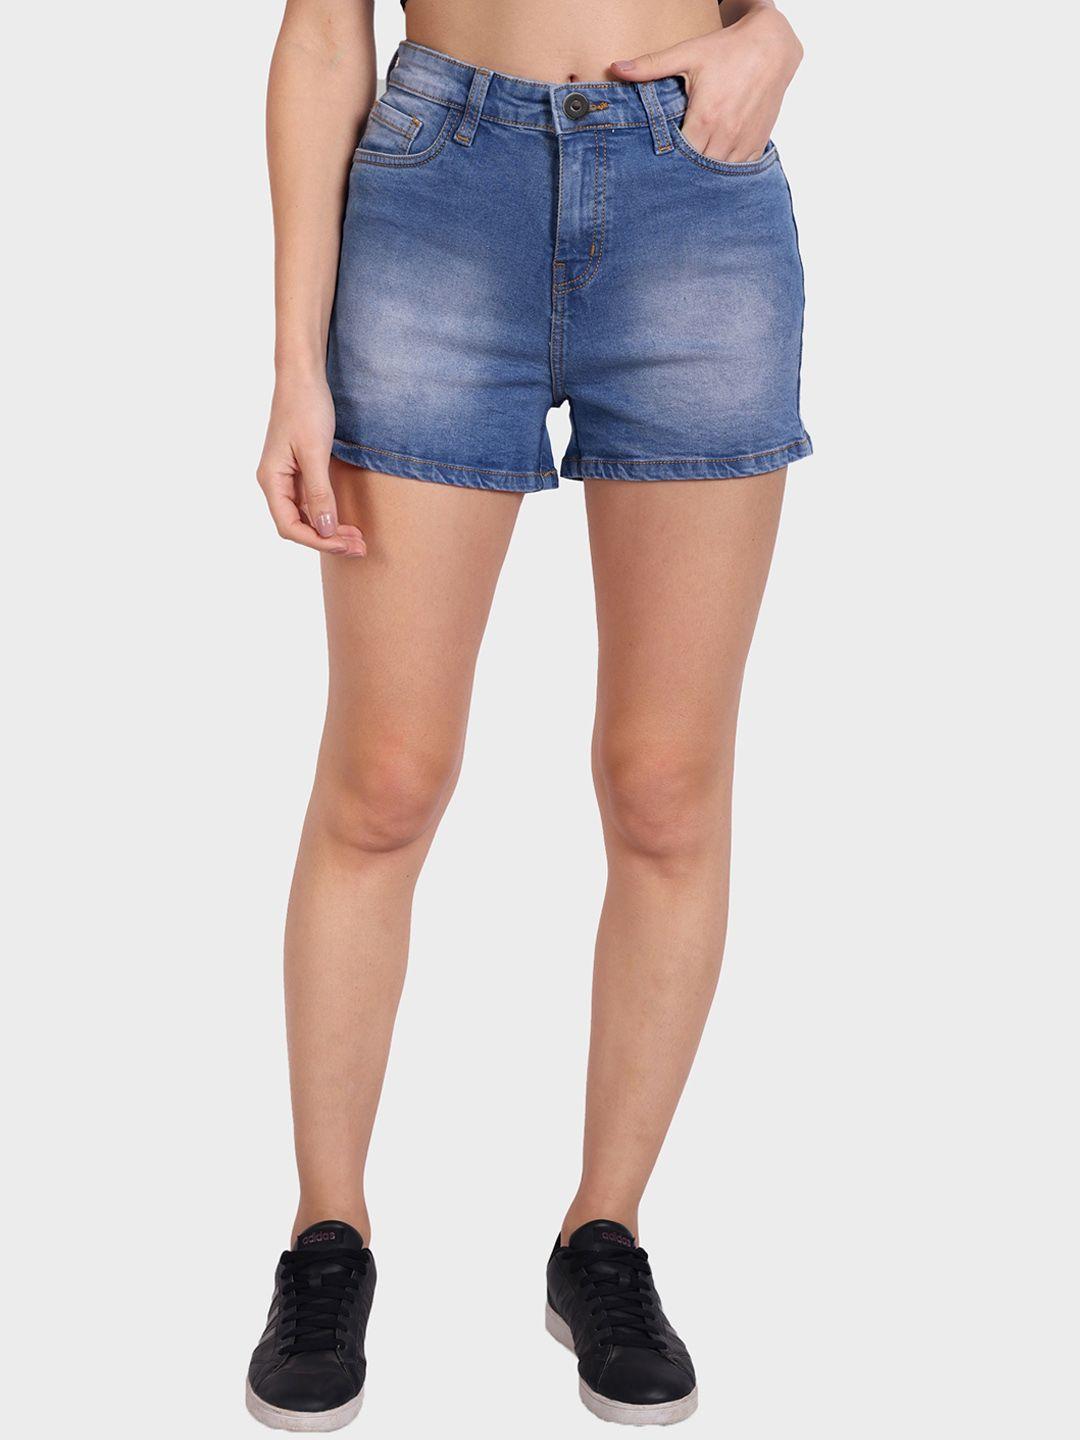 dressberry-women-blue-mid-rise-washed-denim-shorts